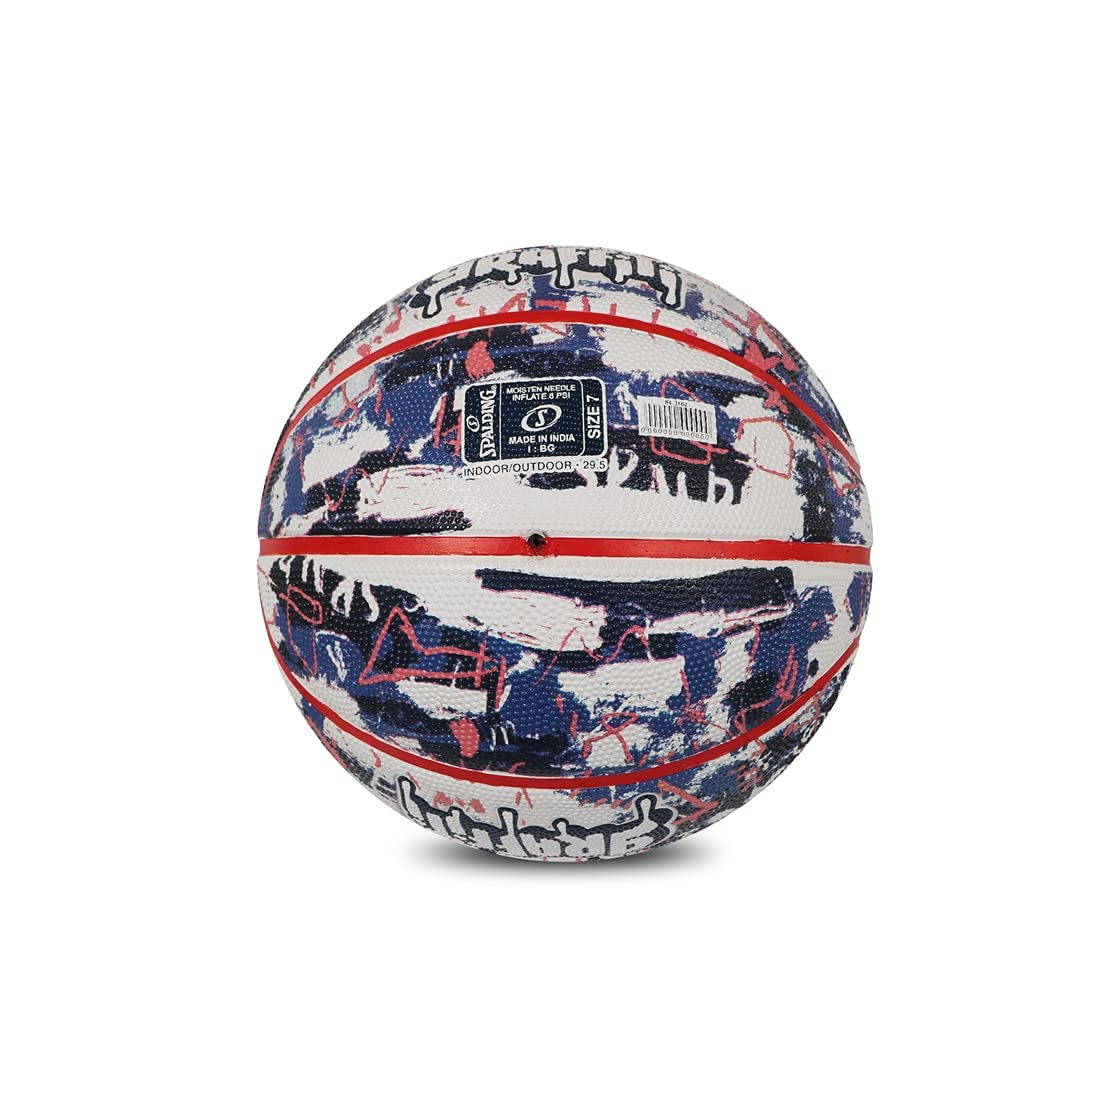 Spalding Garffiti Basketball, Blue/White/Red - Size 7 - Best Price online Prokicksports.com